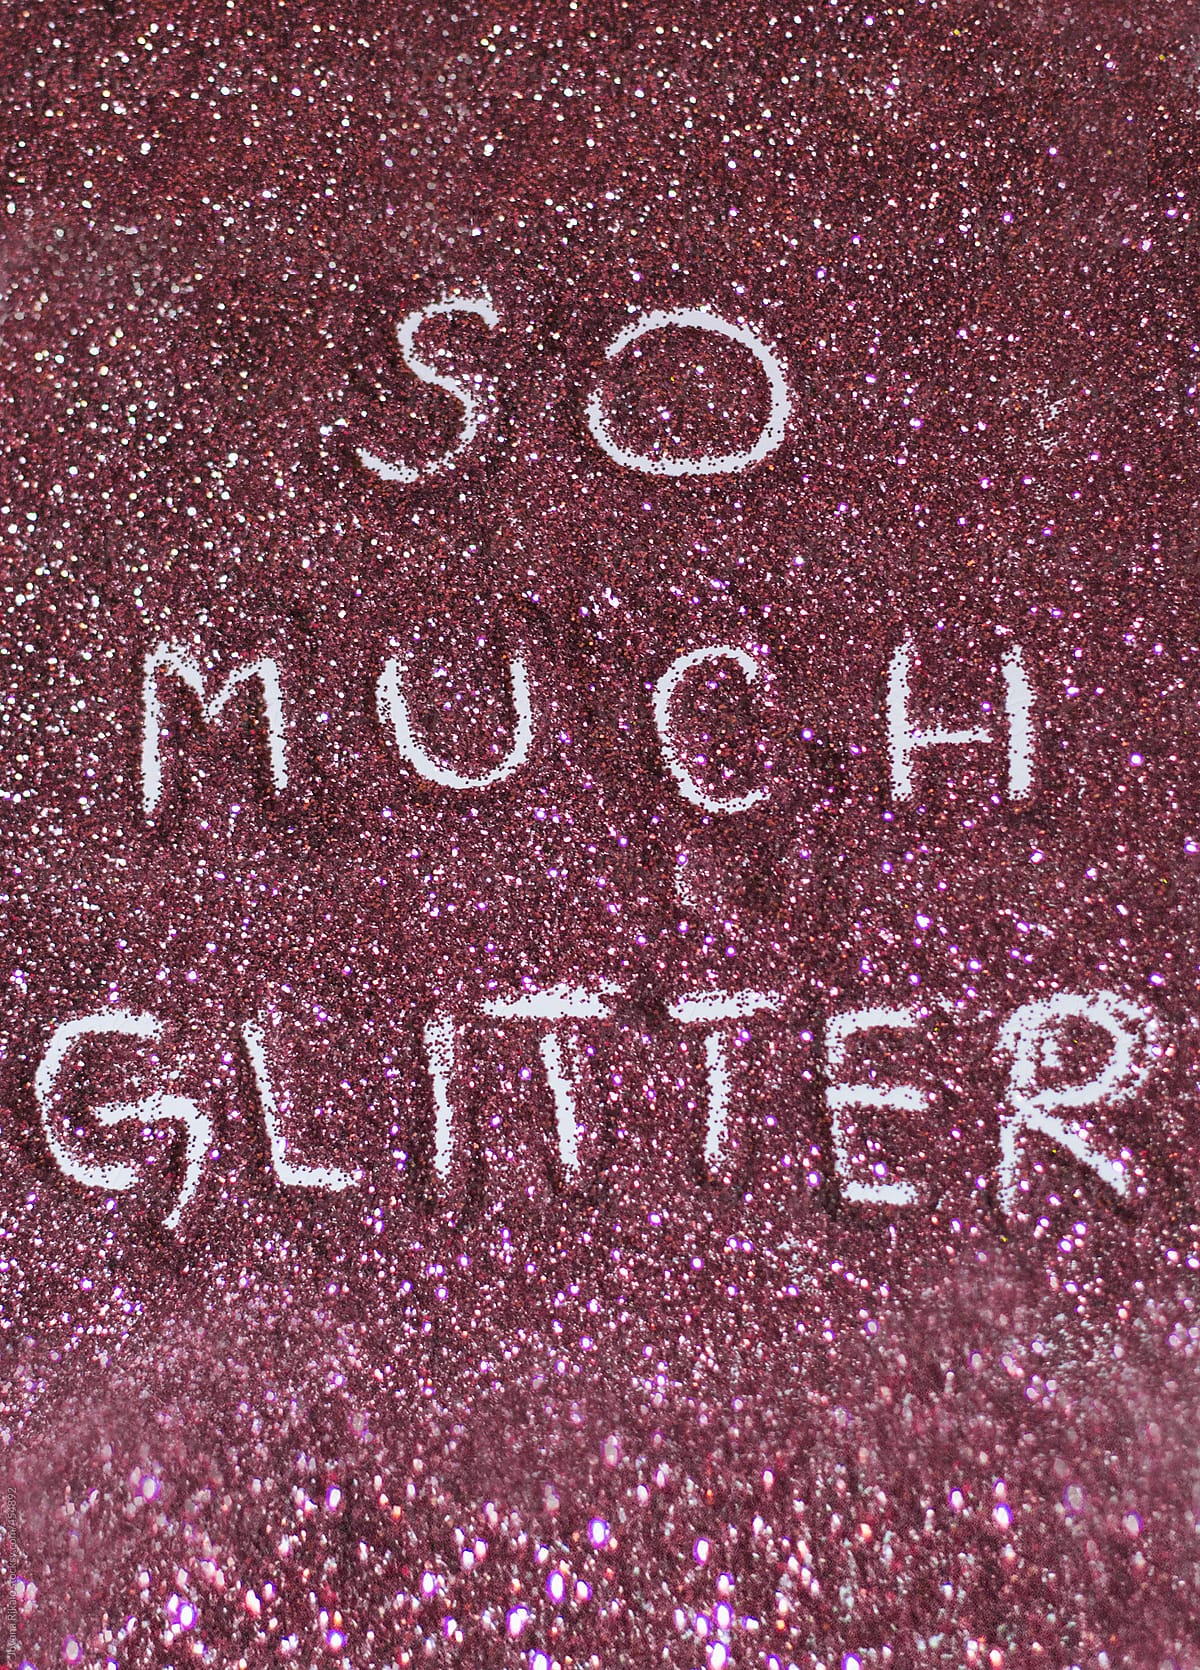 Much glitter